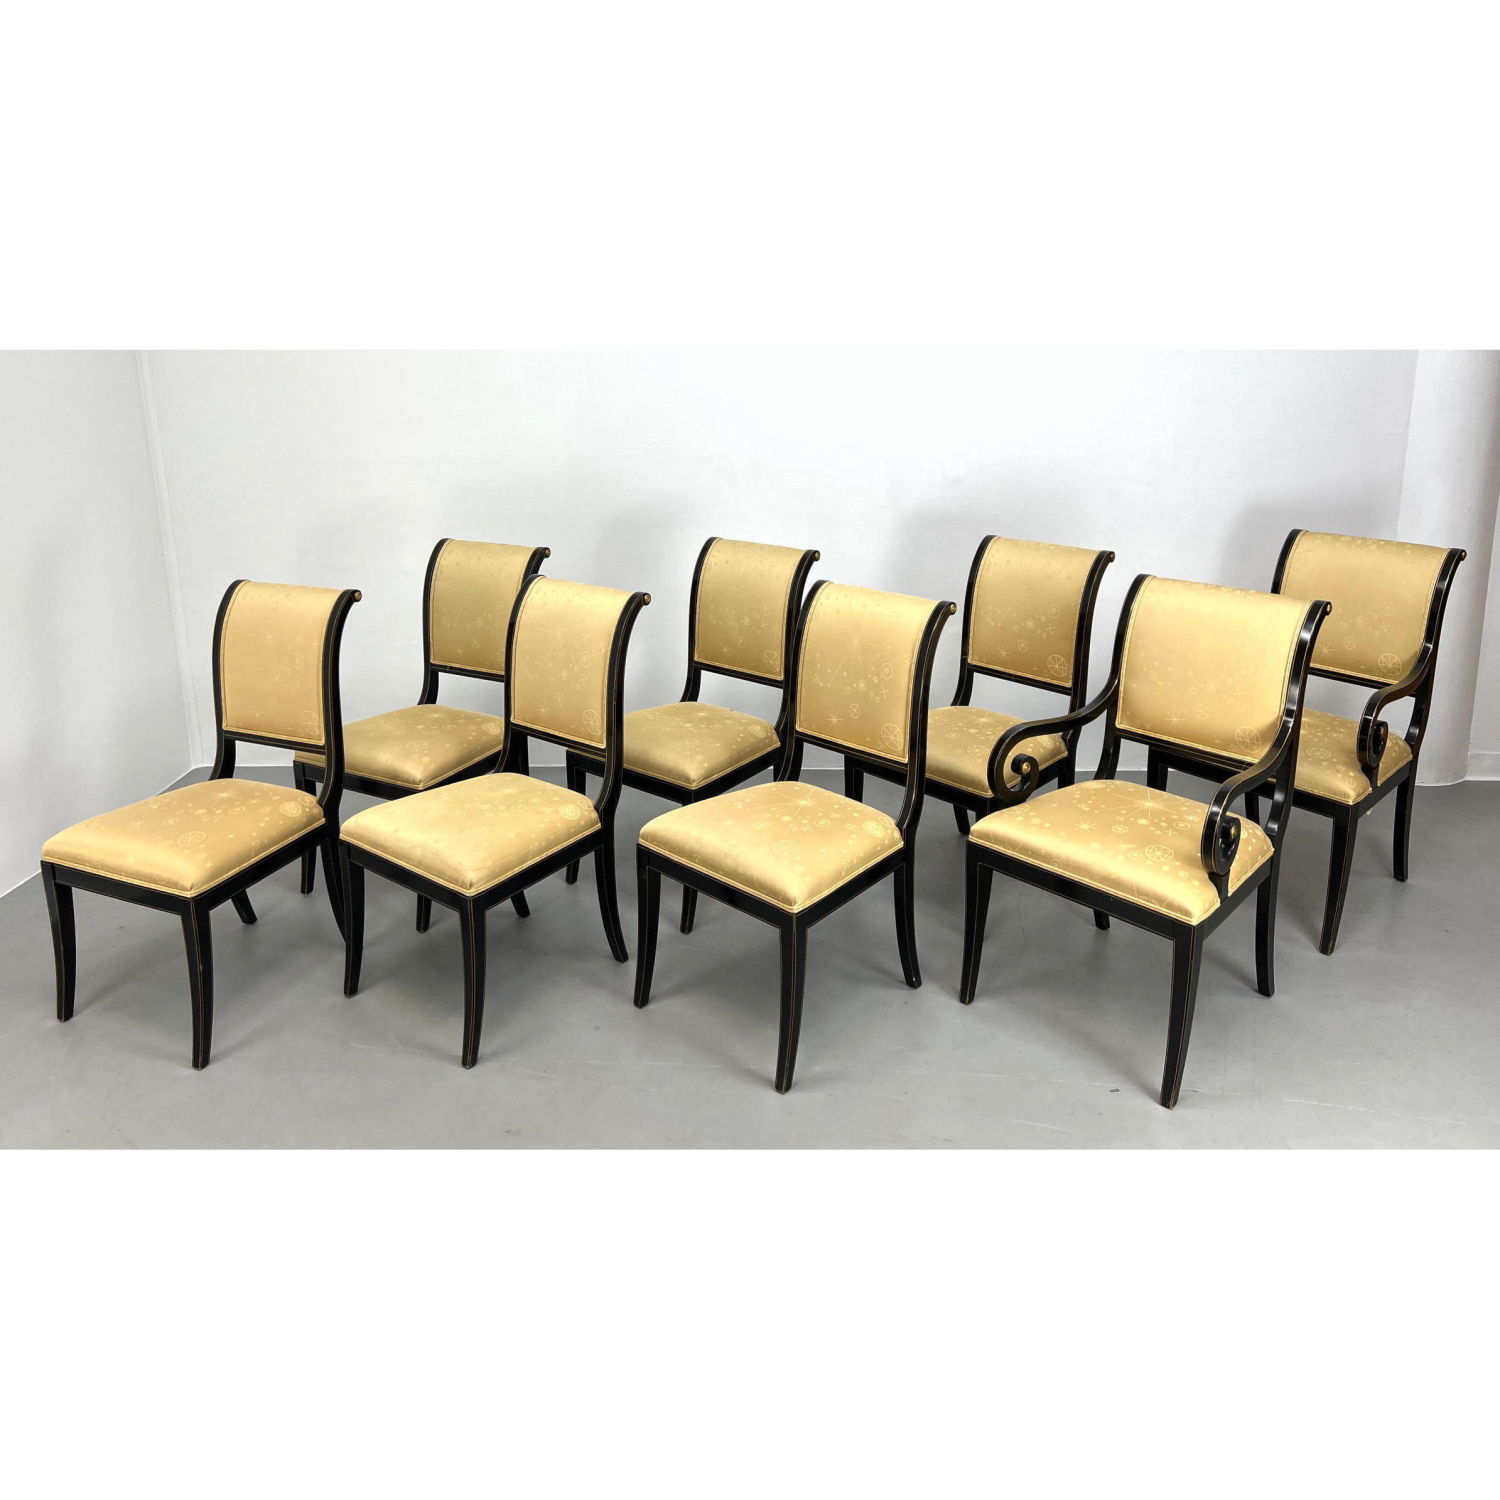 Set 8 KINDEL Dining Chairs Black 2bacb1